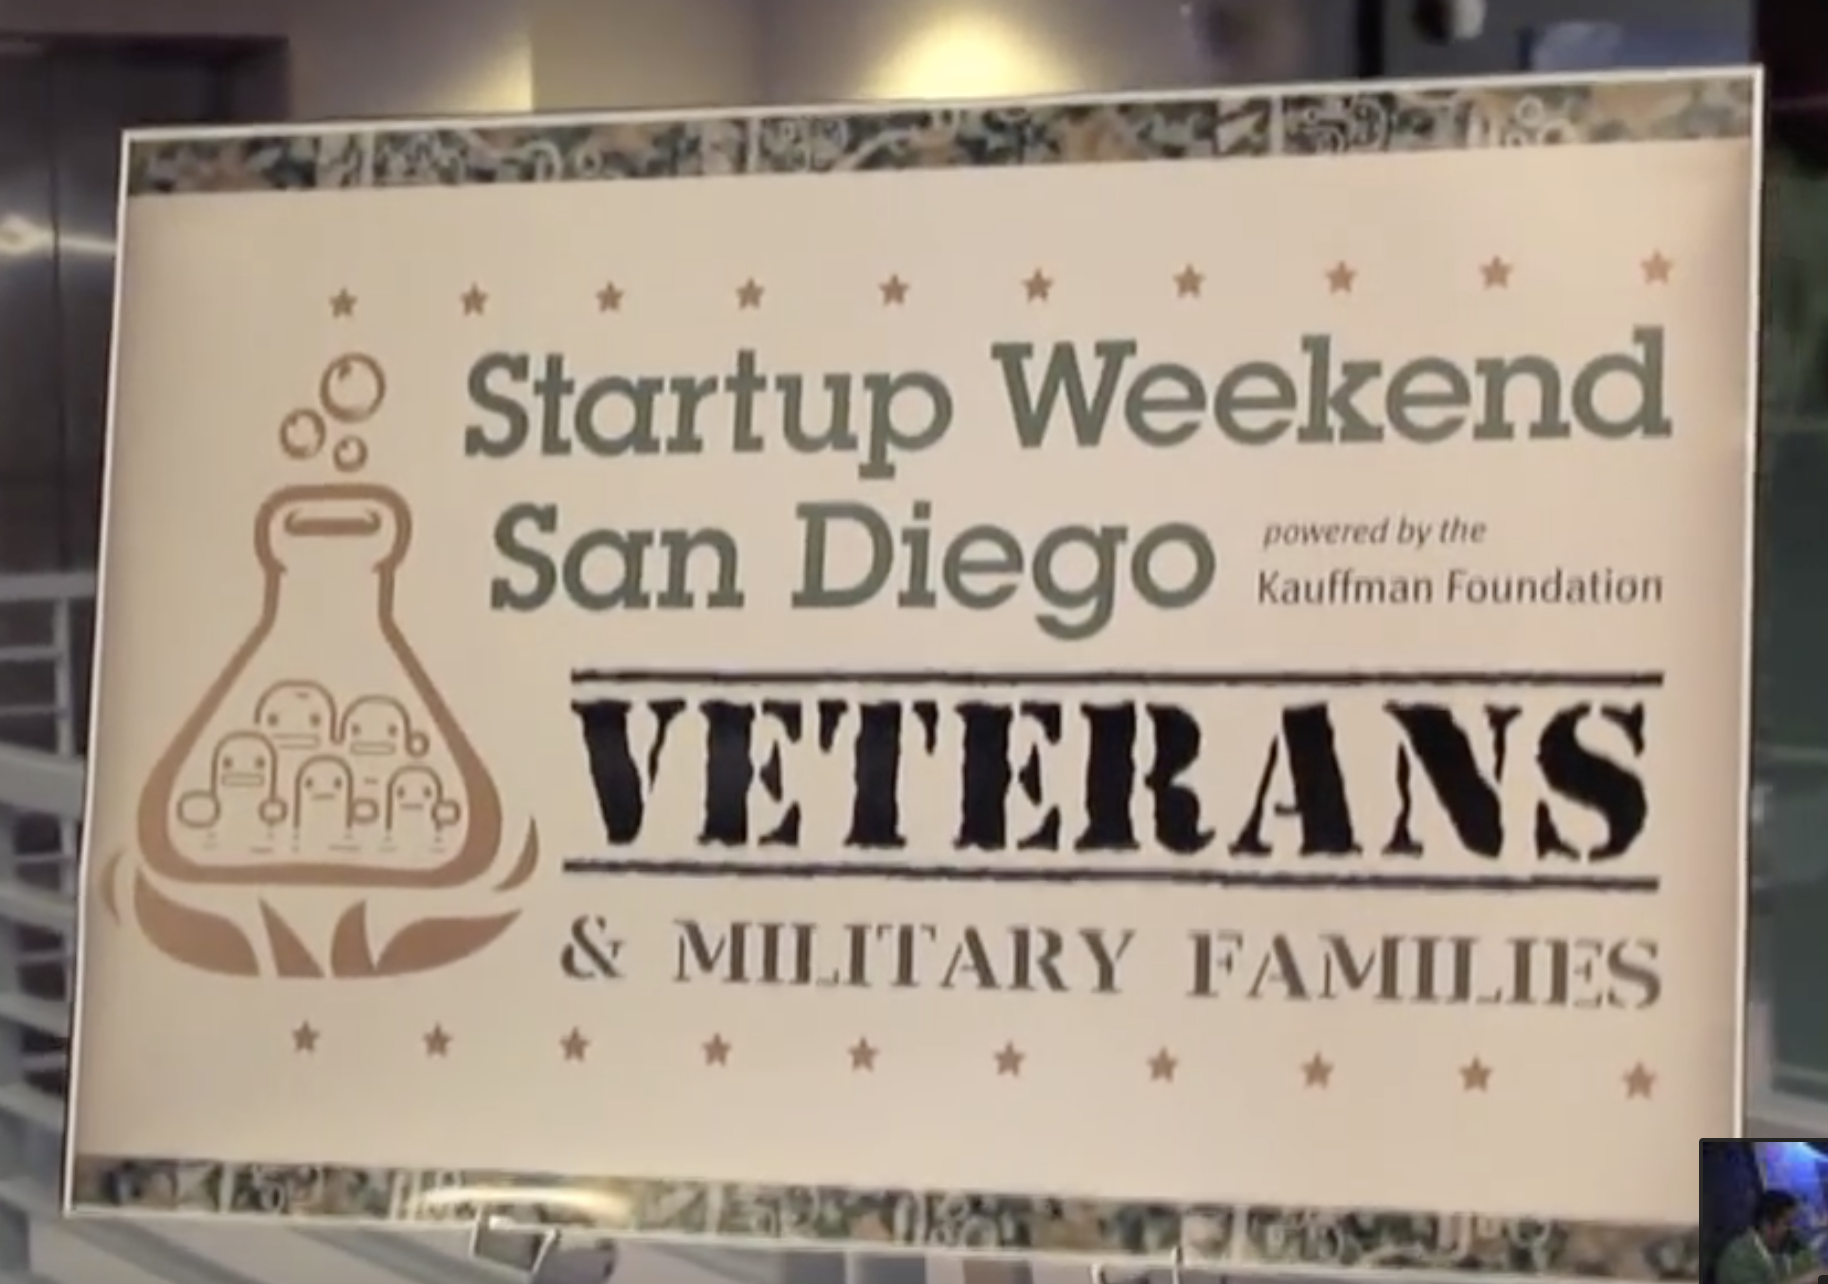 [Video] Startup Weekend Military Veterans & Families